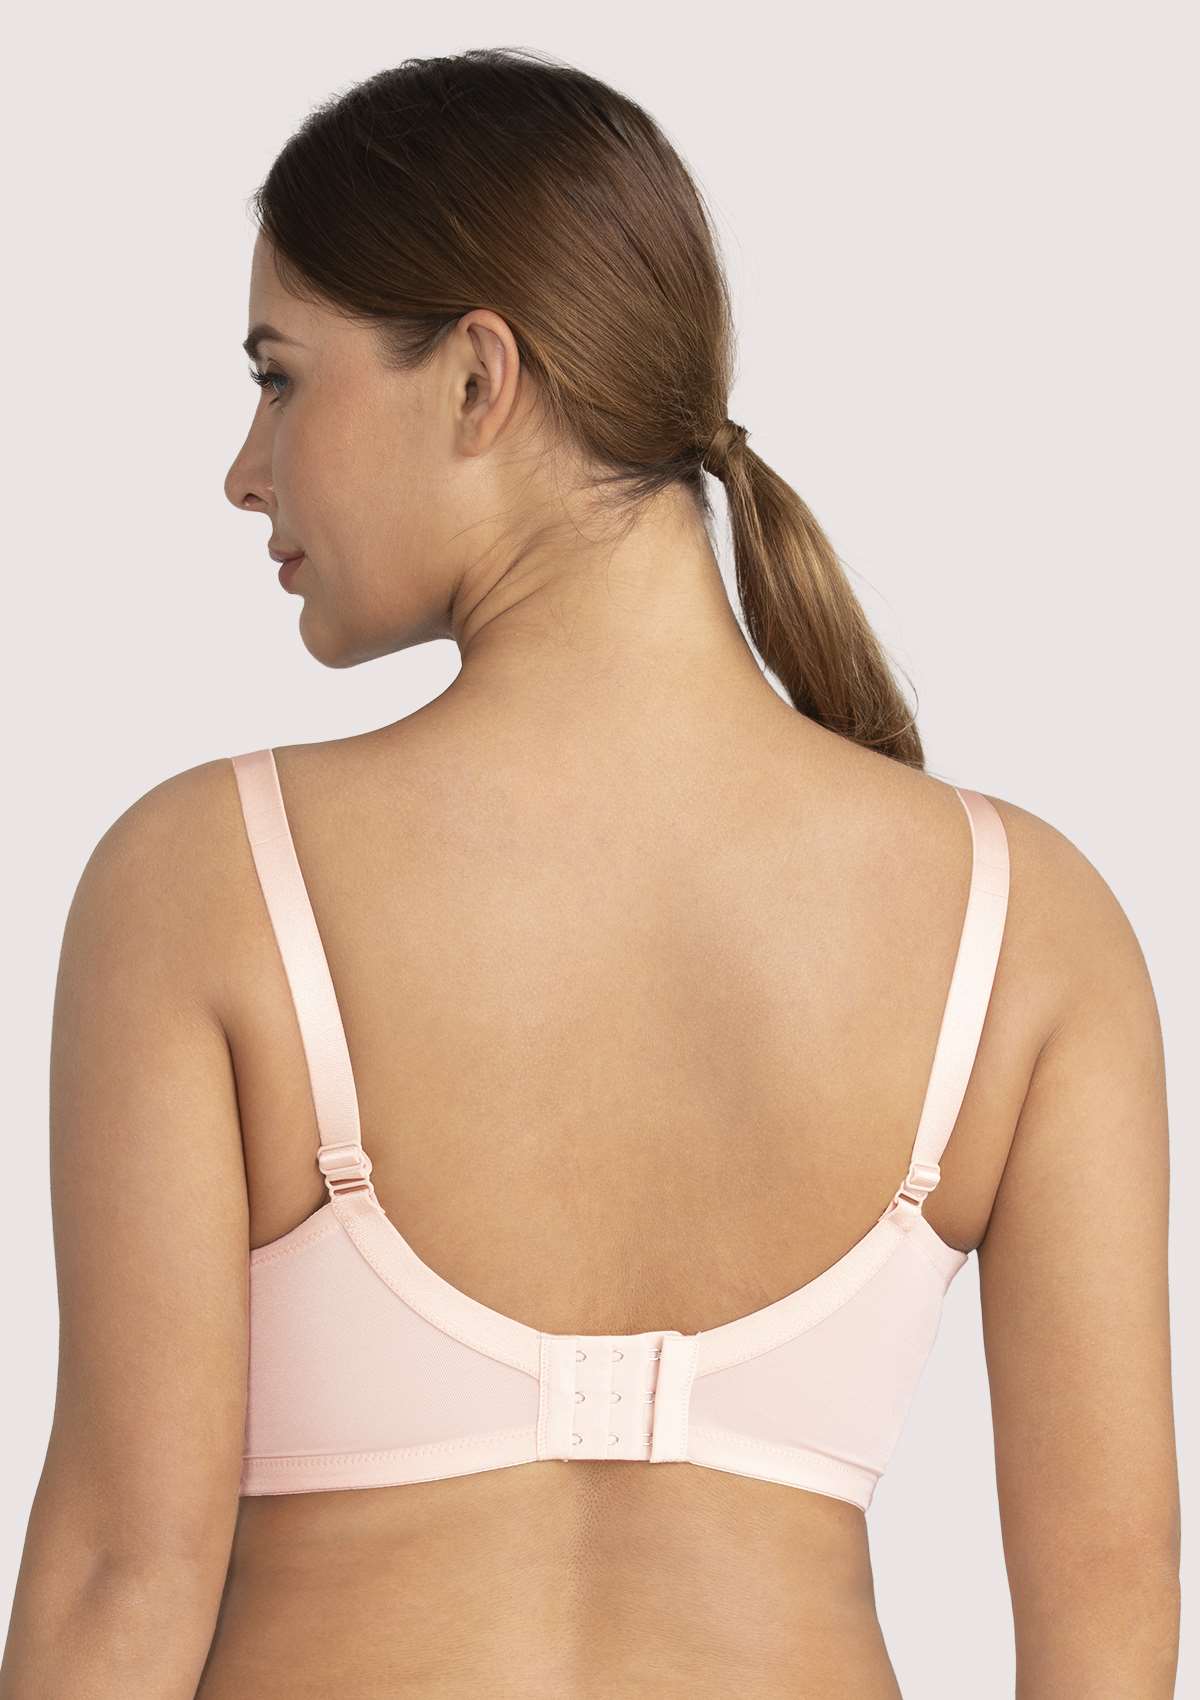 HSIA Sunflower Matching Bra And Panties Set: Comfortable Plus Size Bra - Pink / 46 / C